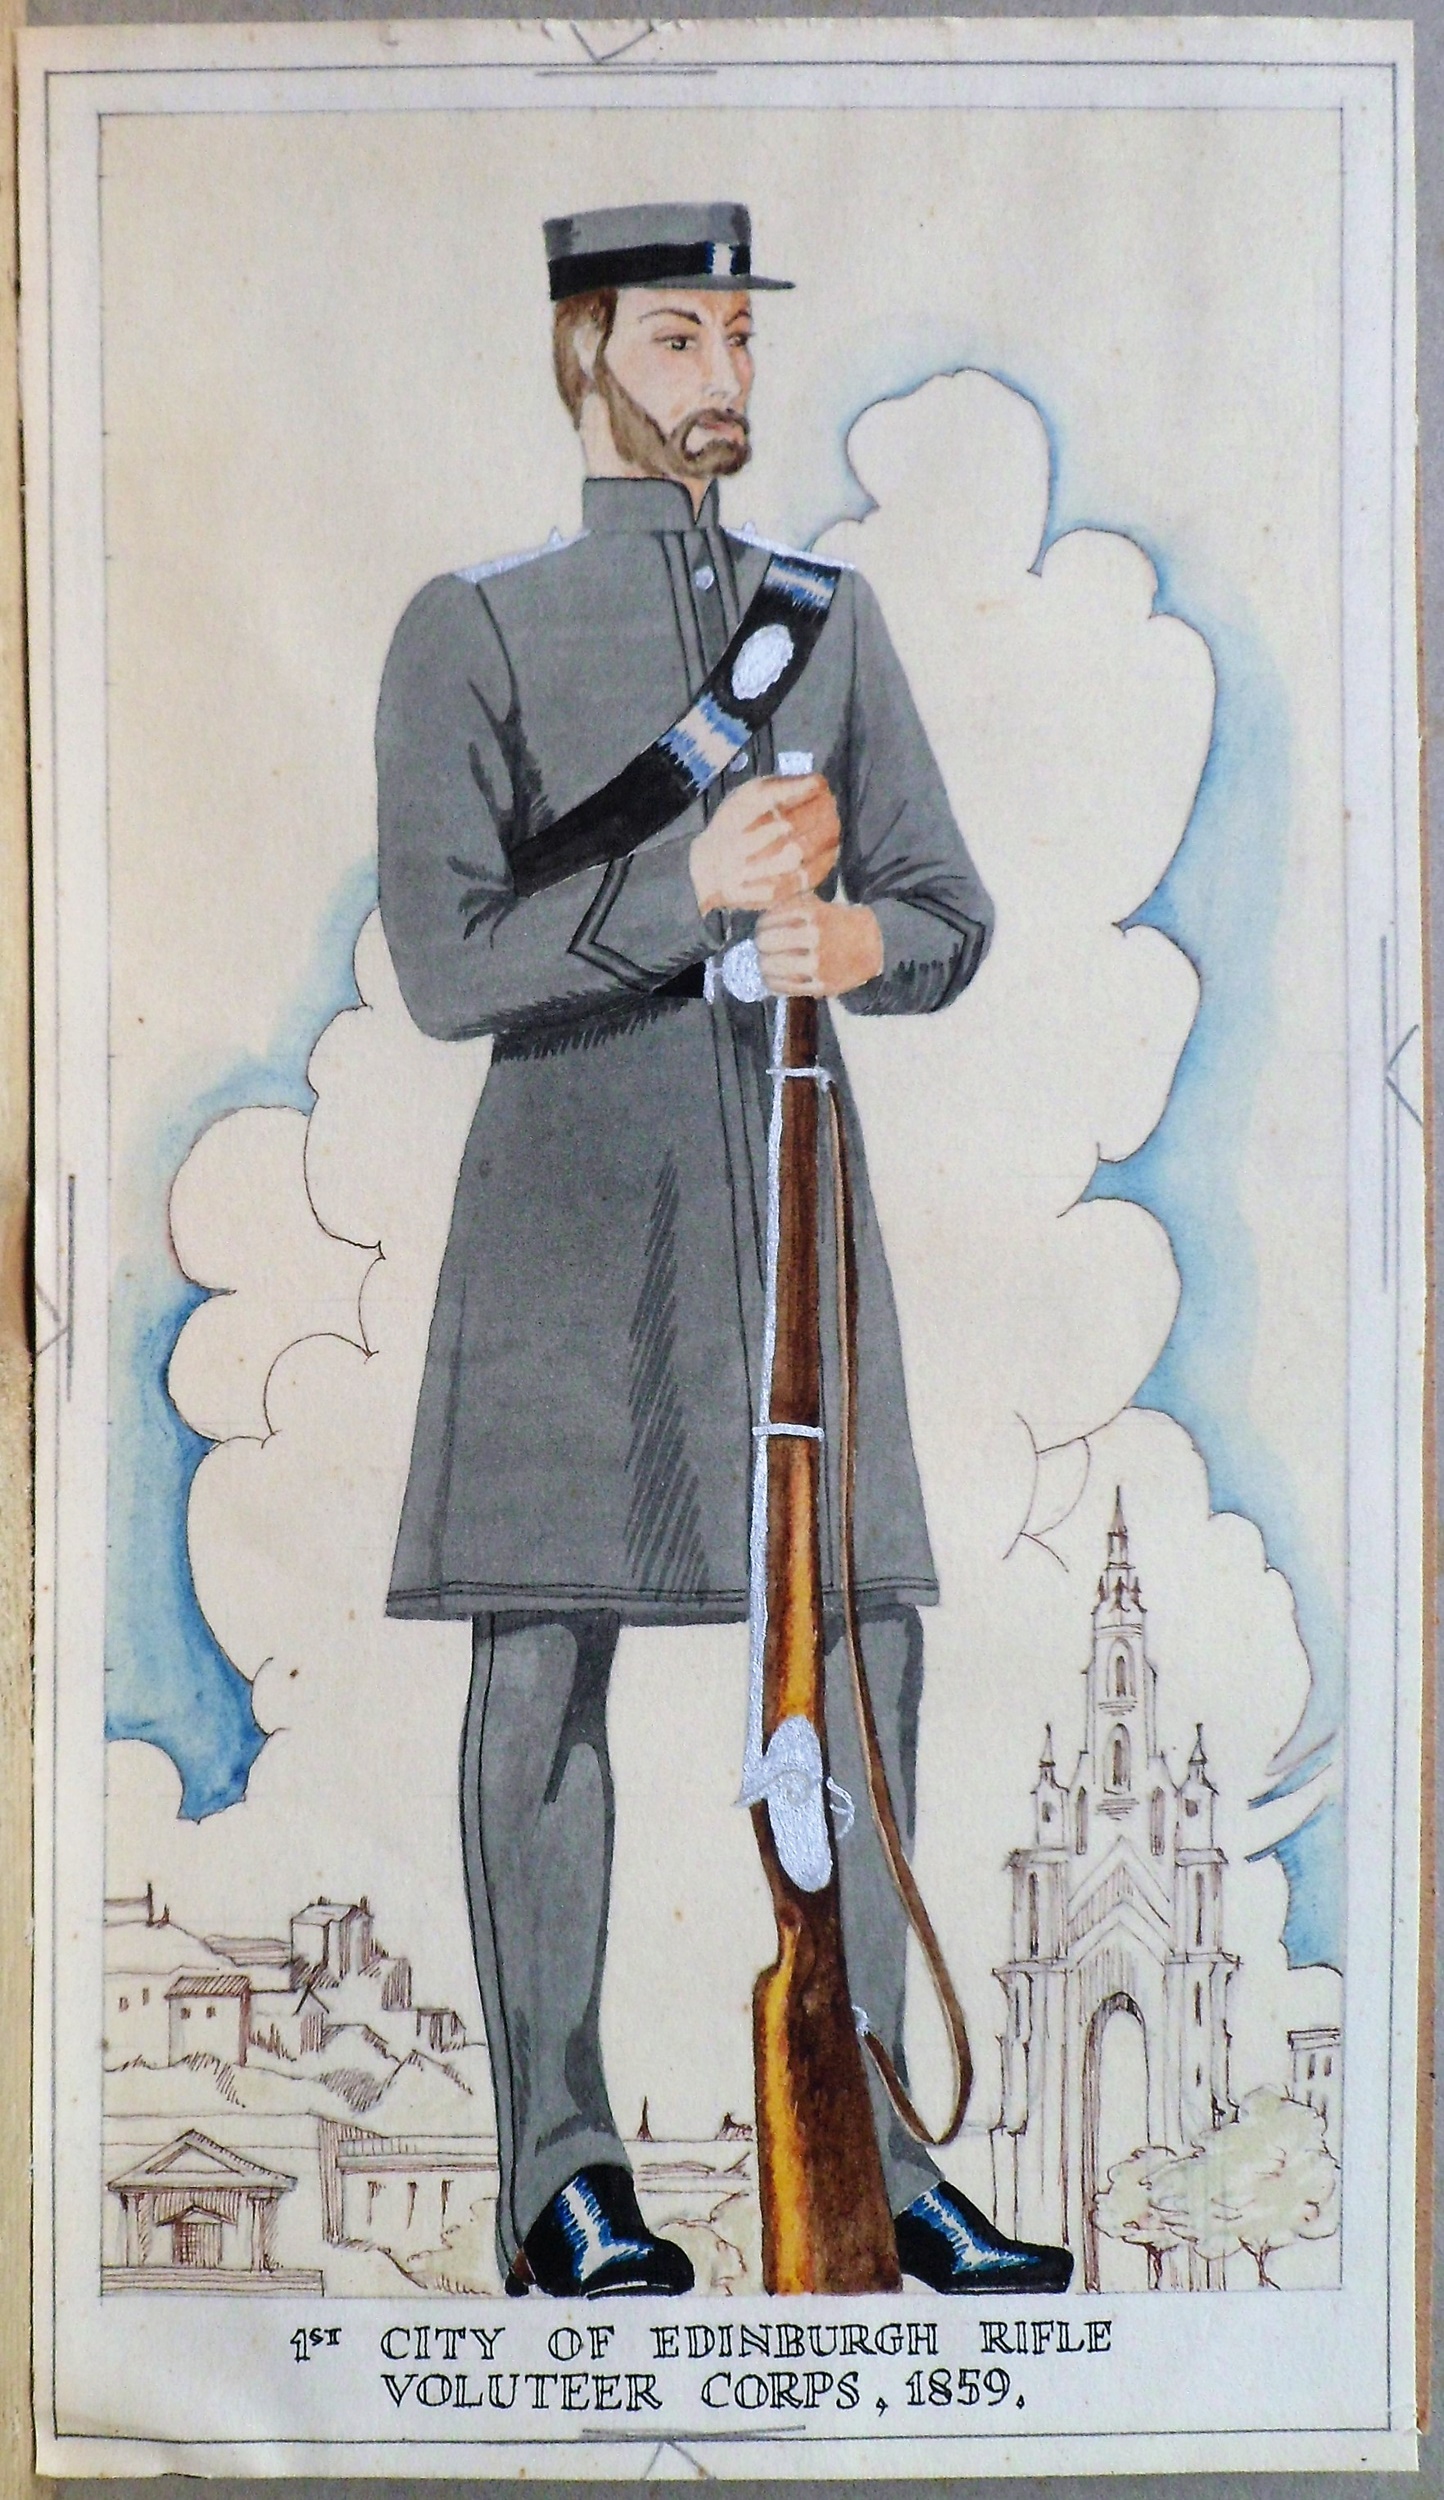 1st City of Edinburgh Rifle Volunteer Corps 1895, designed for Player's Cigarette Cards